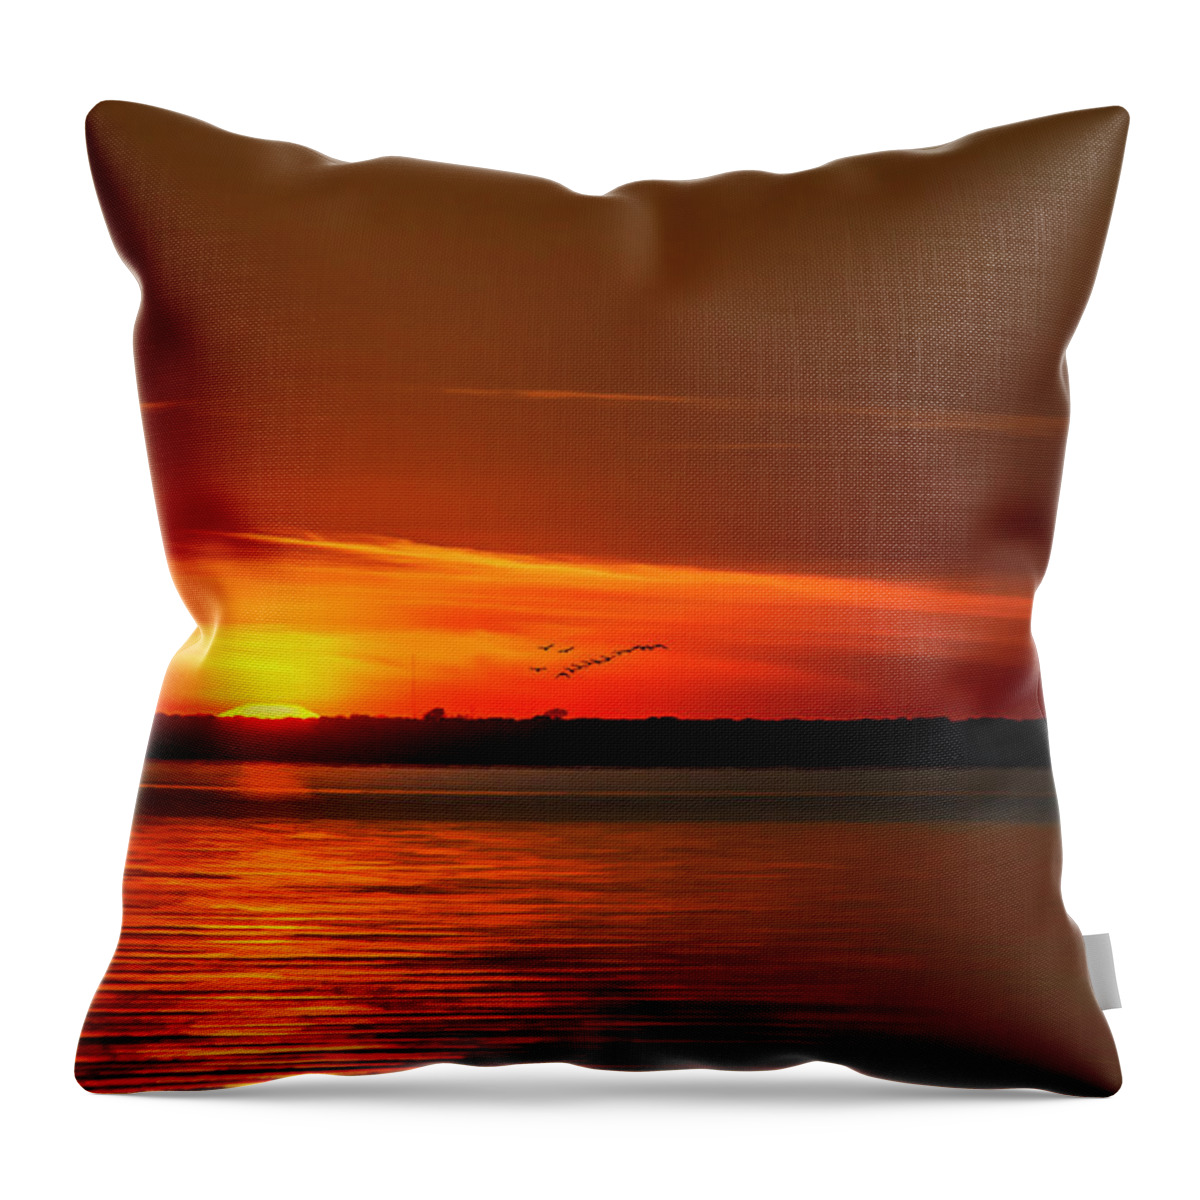 Sunset Throw Pillow featuring the photograph Beach Sunset by Cathy Kovarik